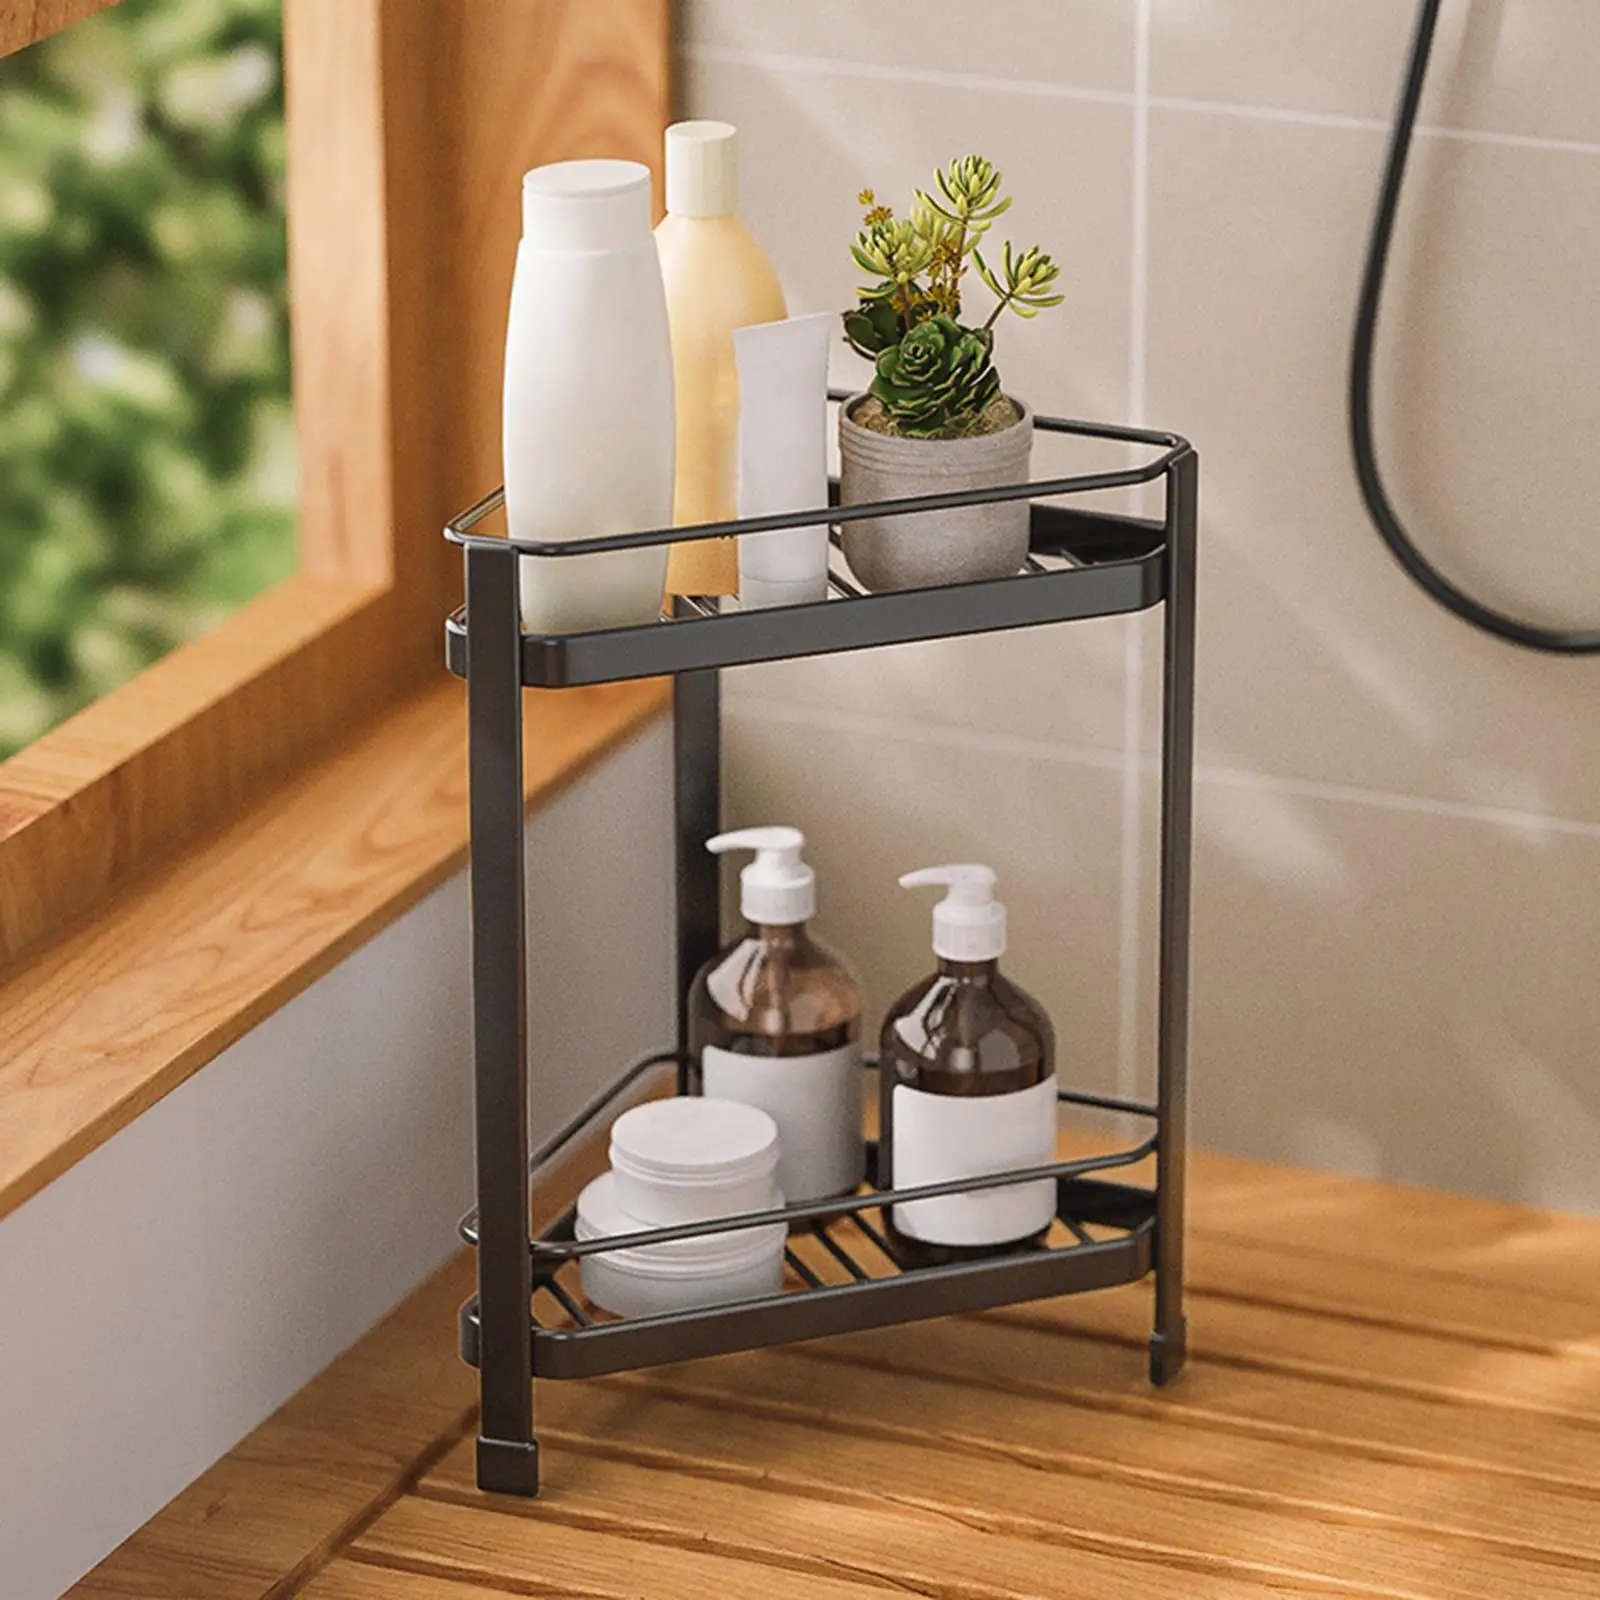 Tripod Bathroom Shelf Corner Shelf Storage Standing Multifunctional Stable Standing Rack for Narrow space